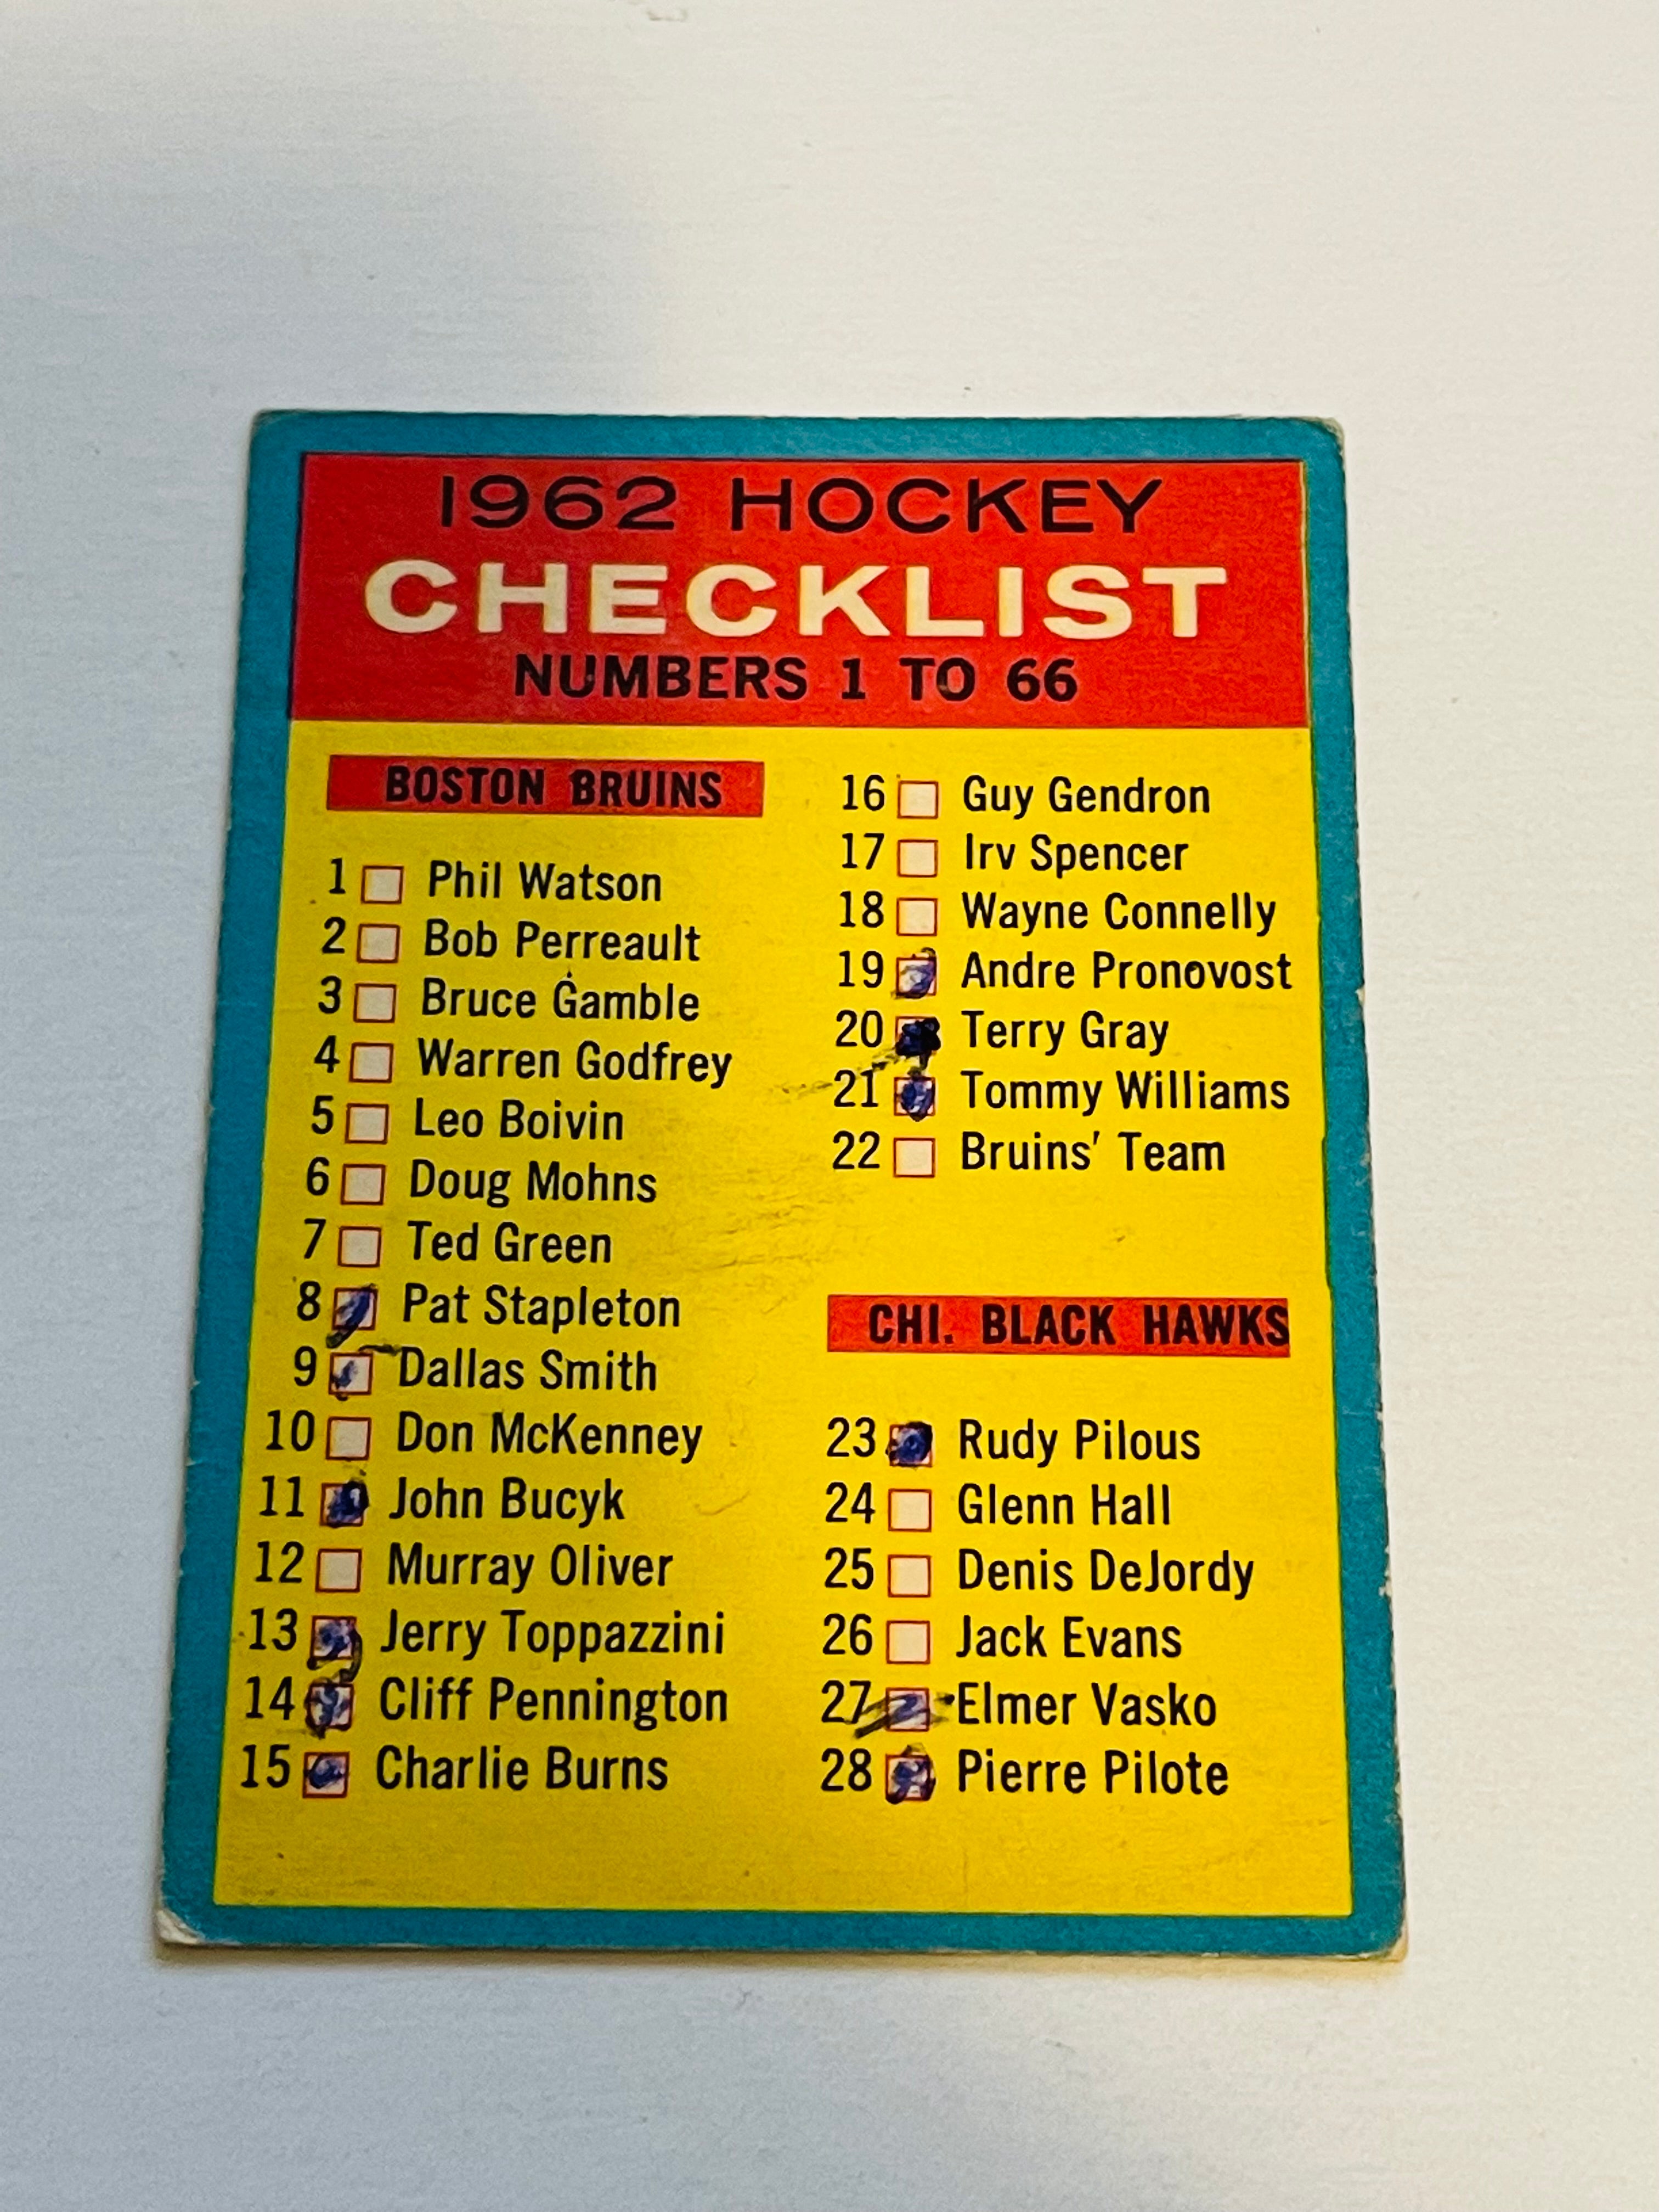 1962 Topps rare hockey card checklist card